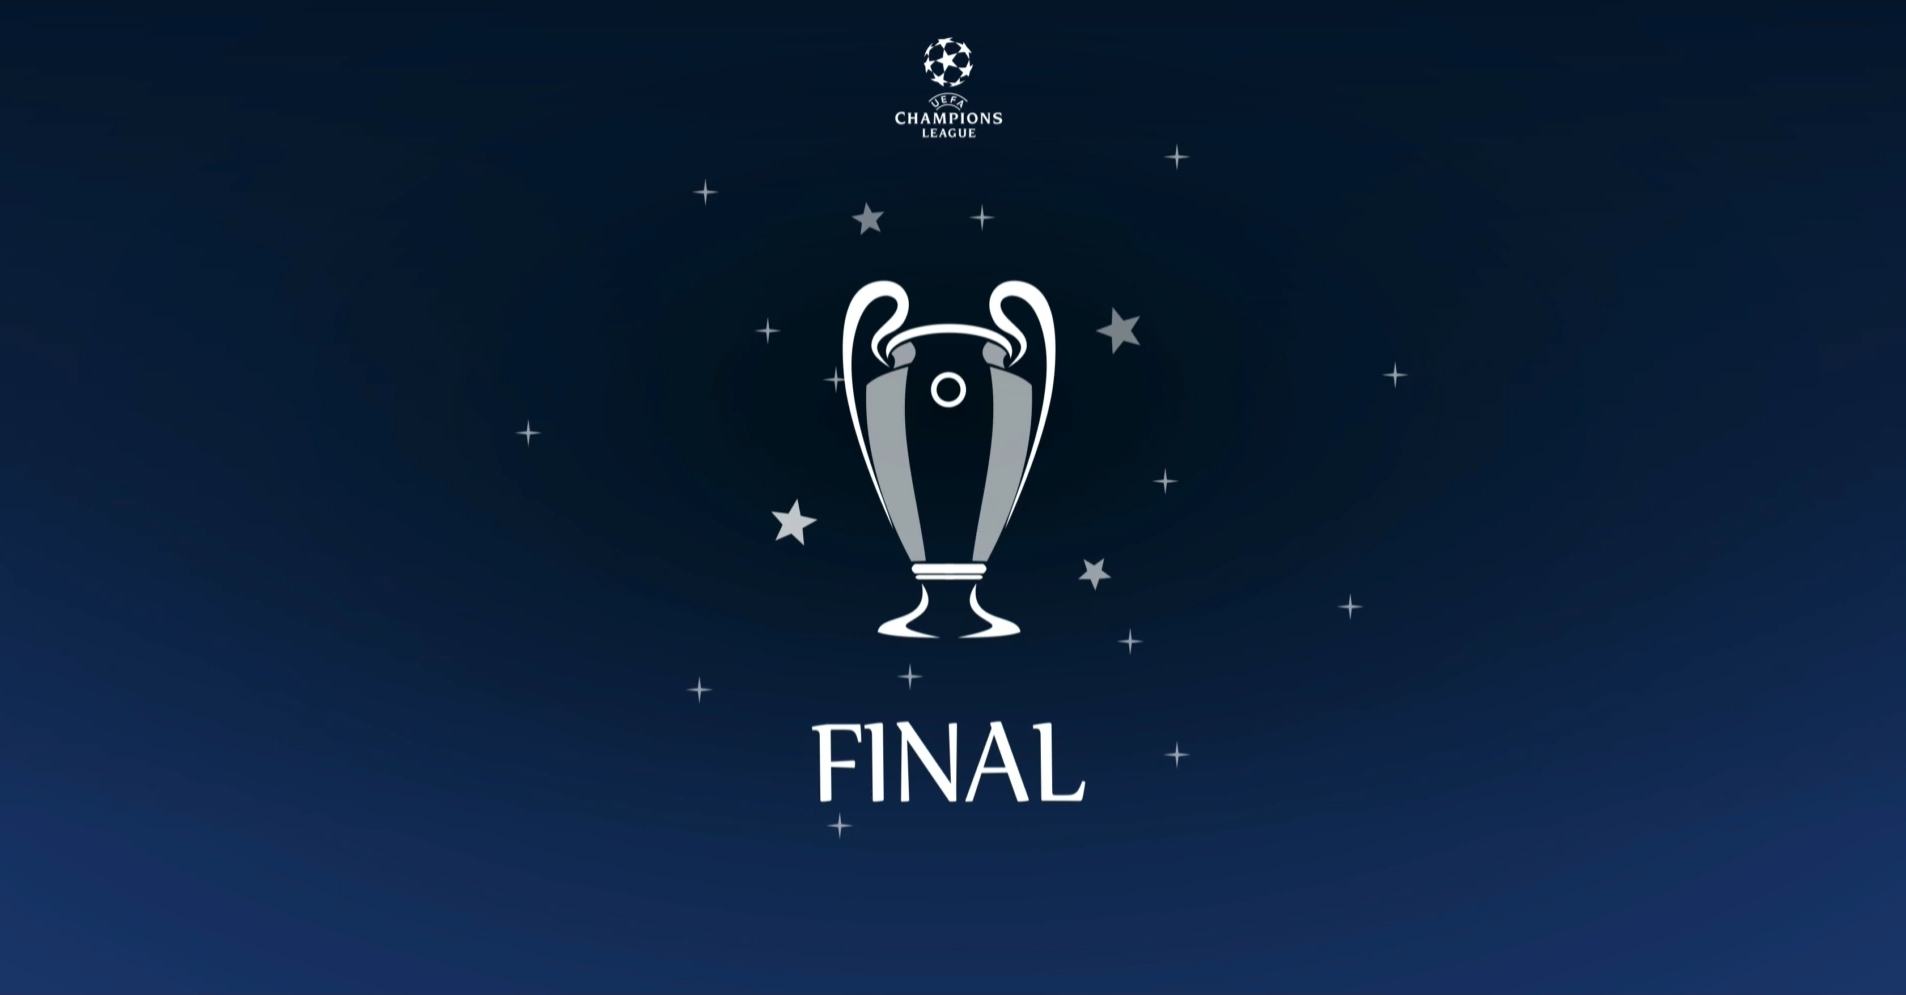 UEFA Champions League Final Wallpaper Blank